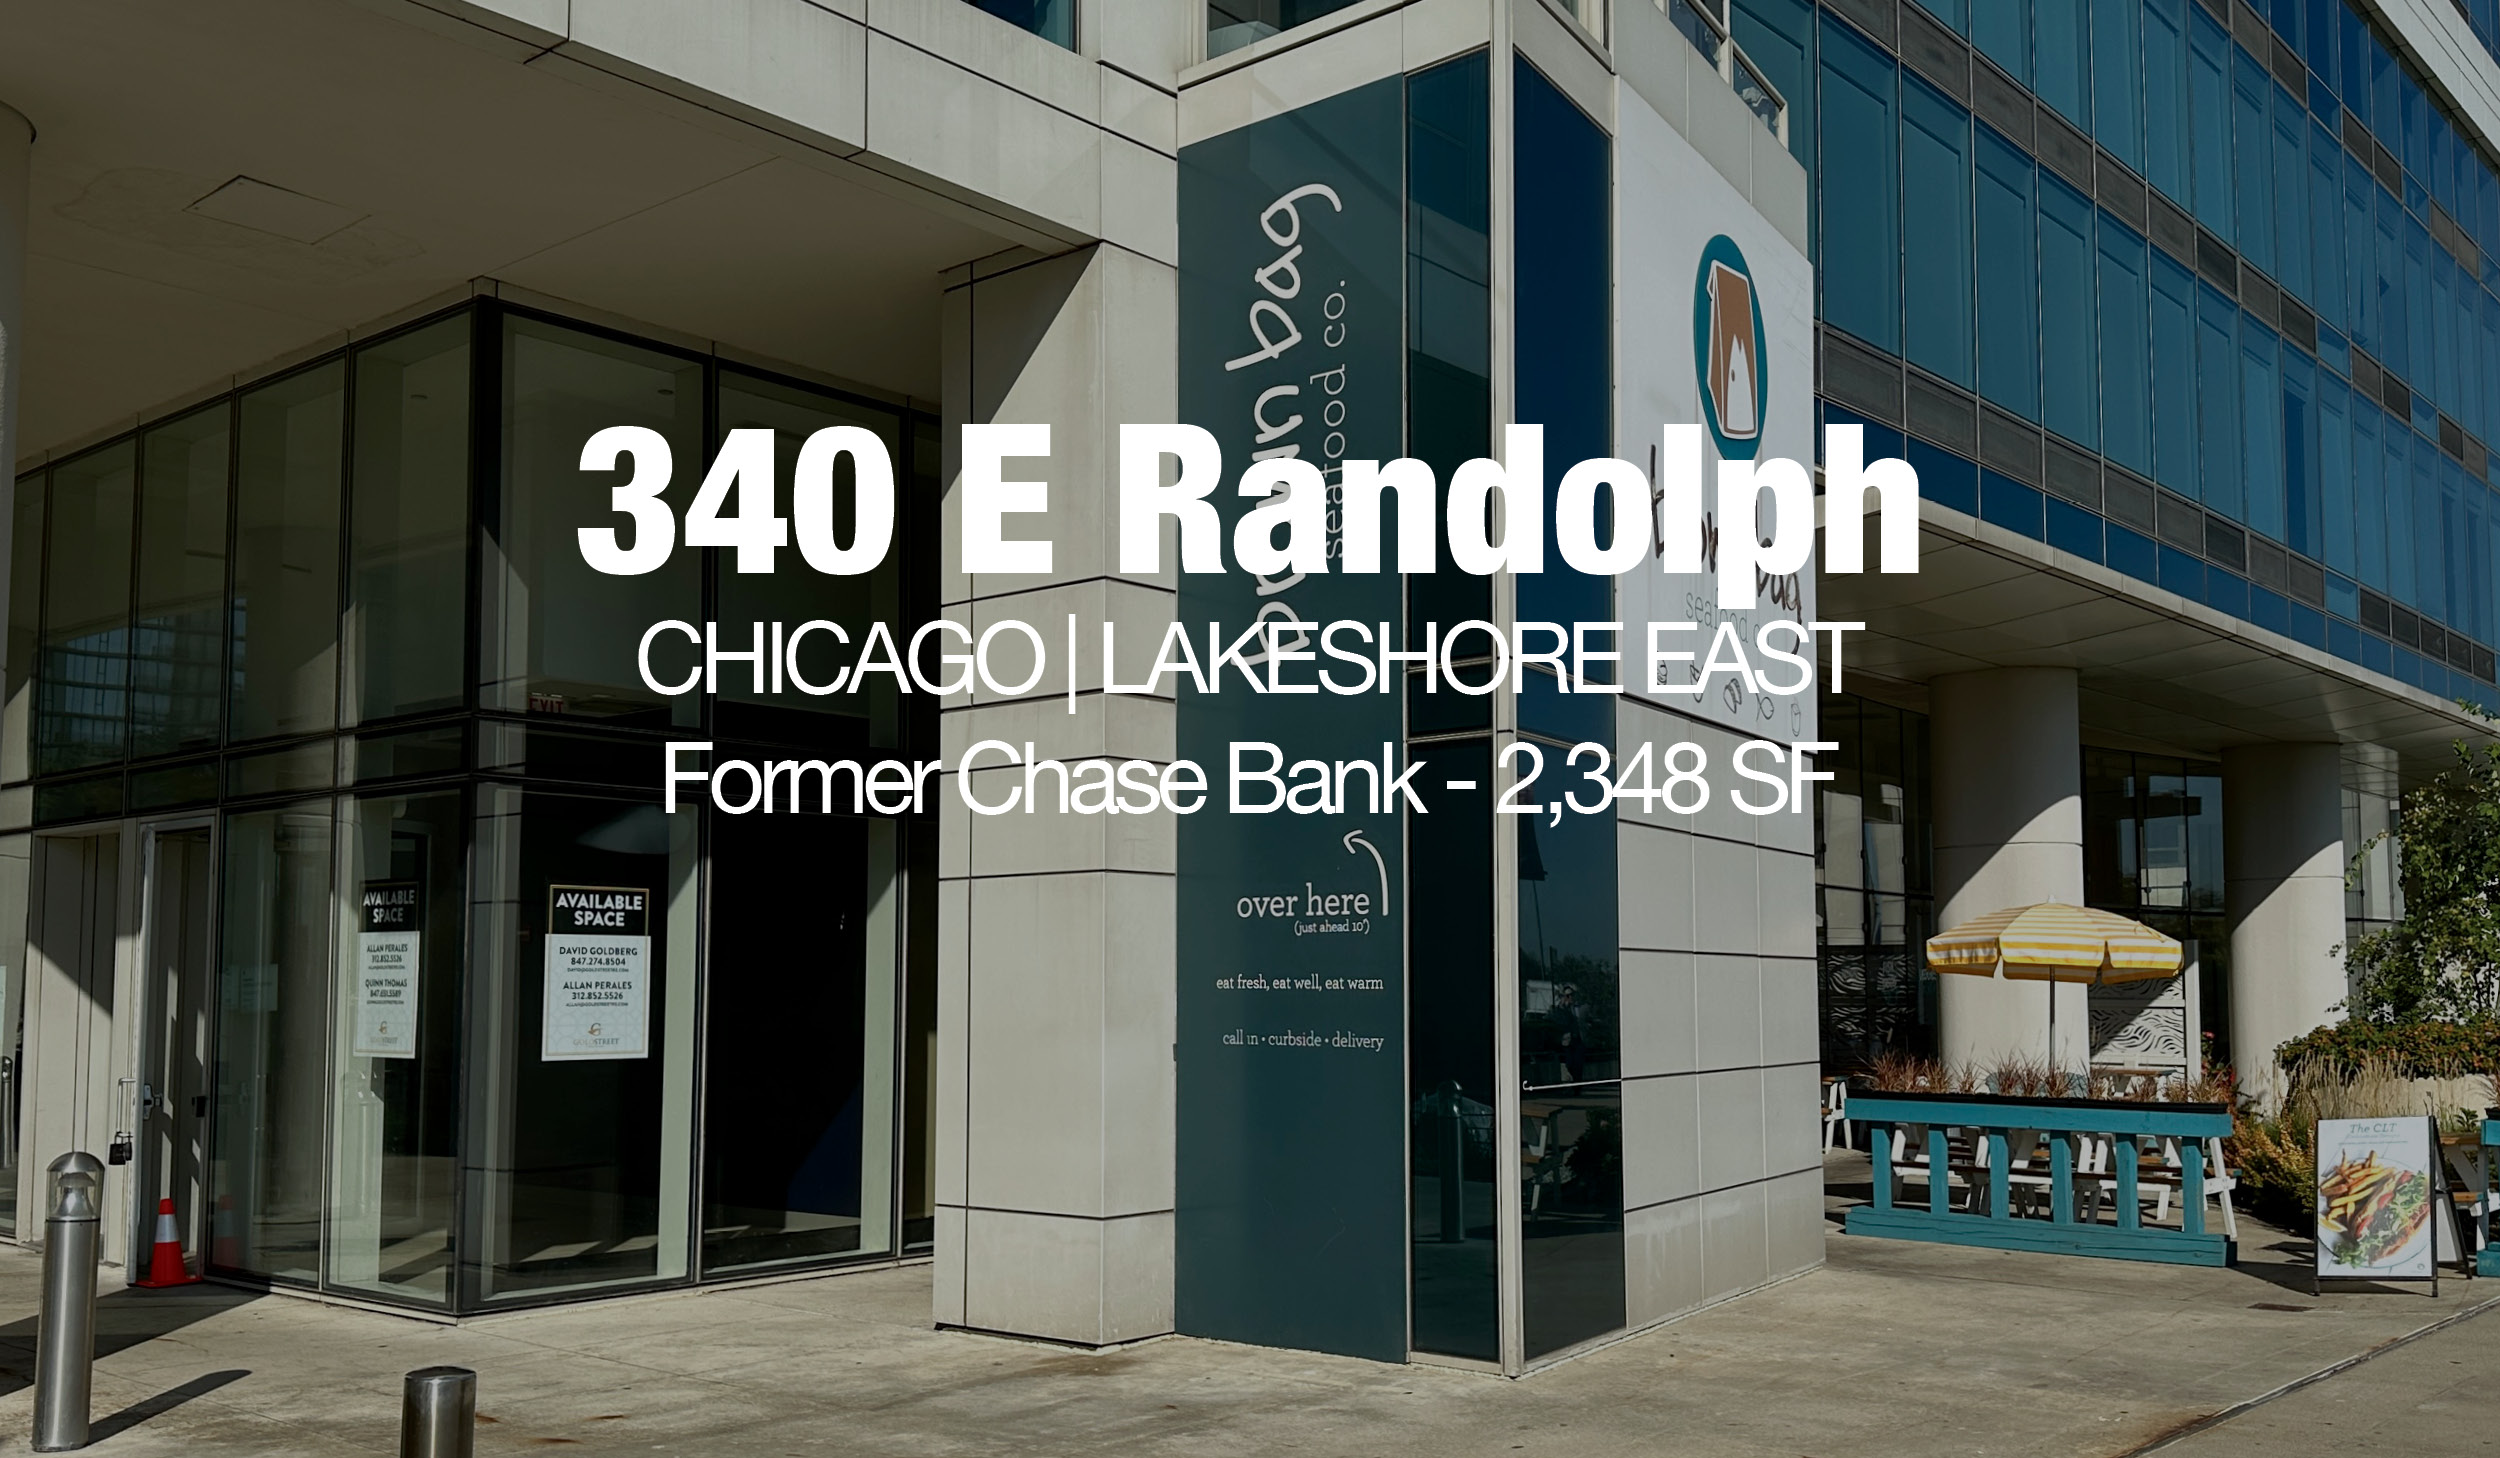 340 E Randolph - Goldstreet Partners